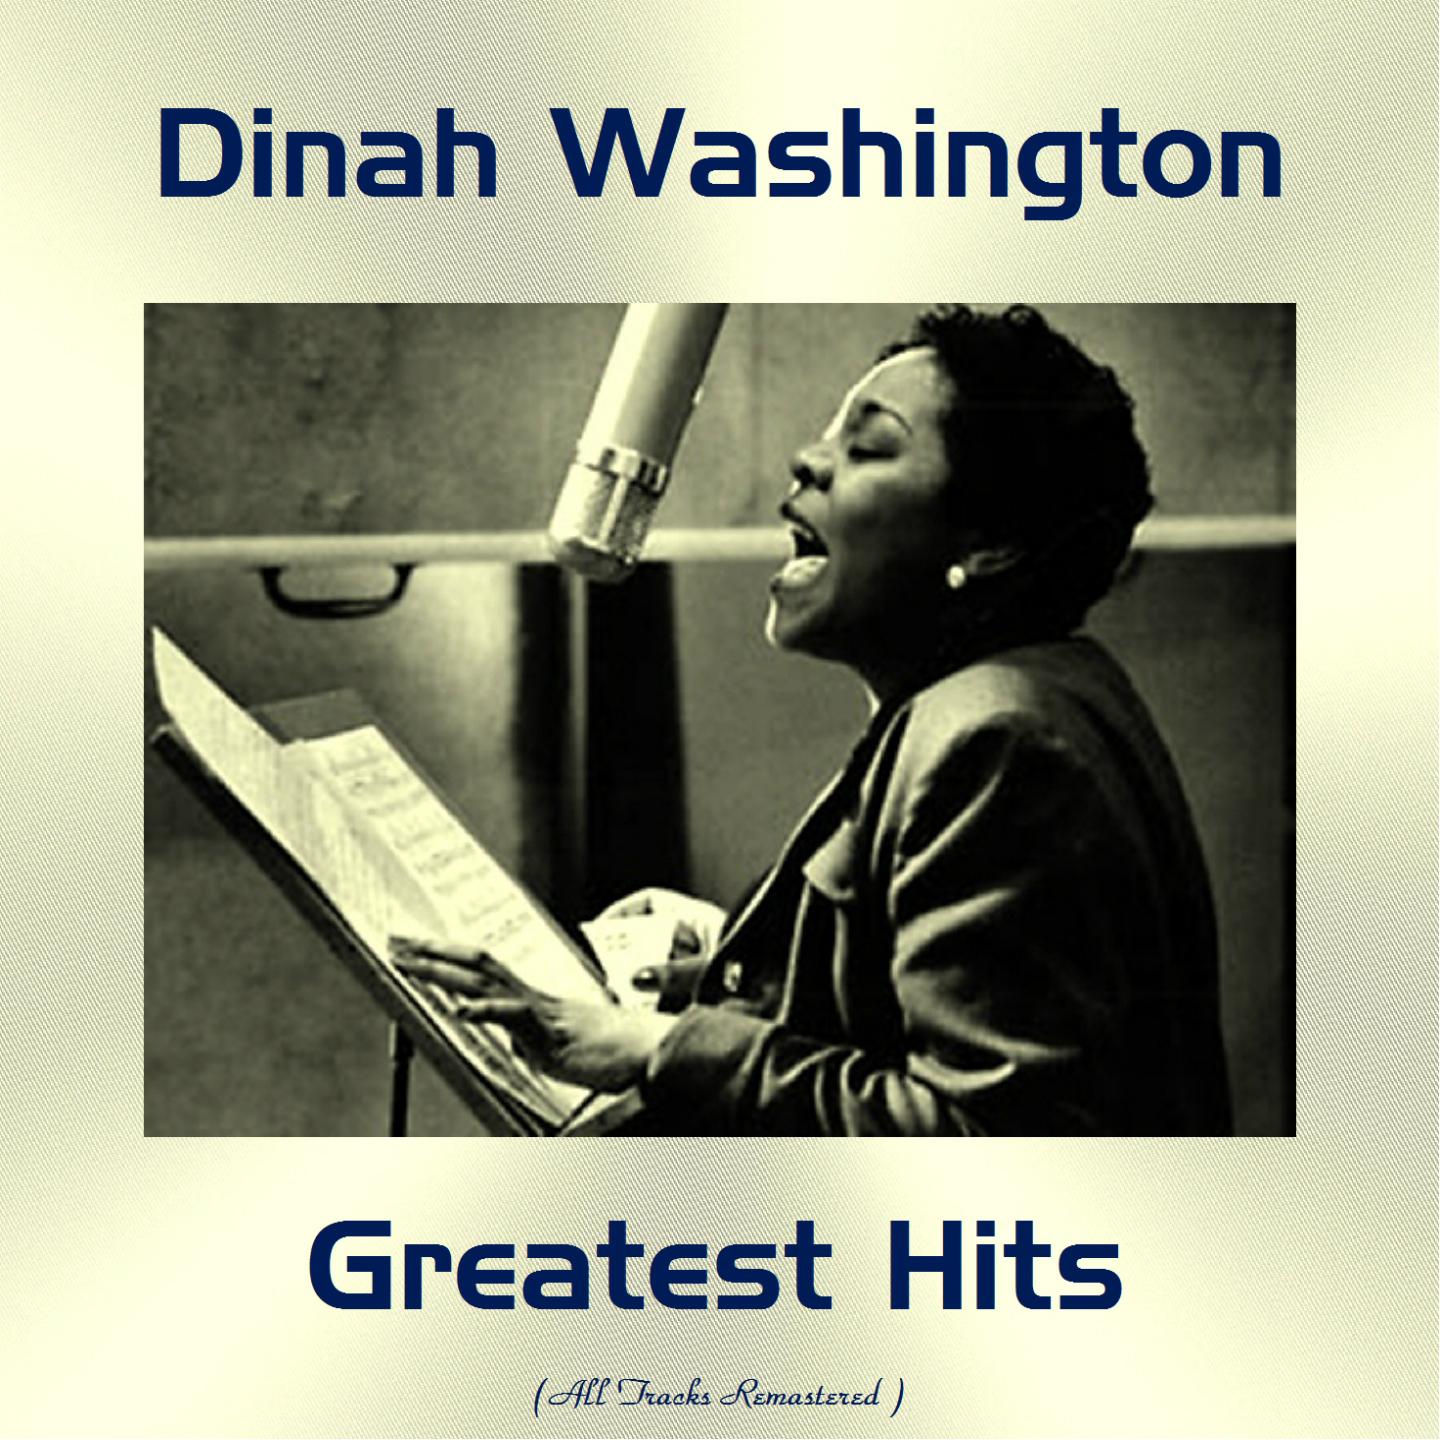 Dinah Washington Greatest Hits (All Tracks Remastered)专辑